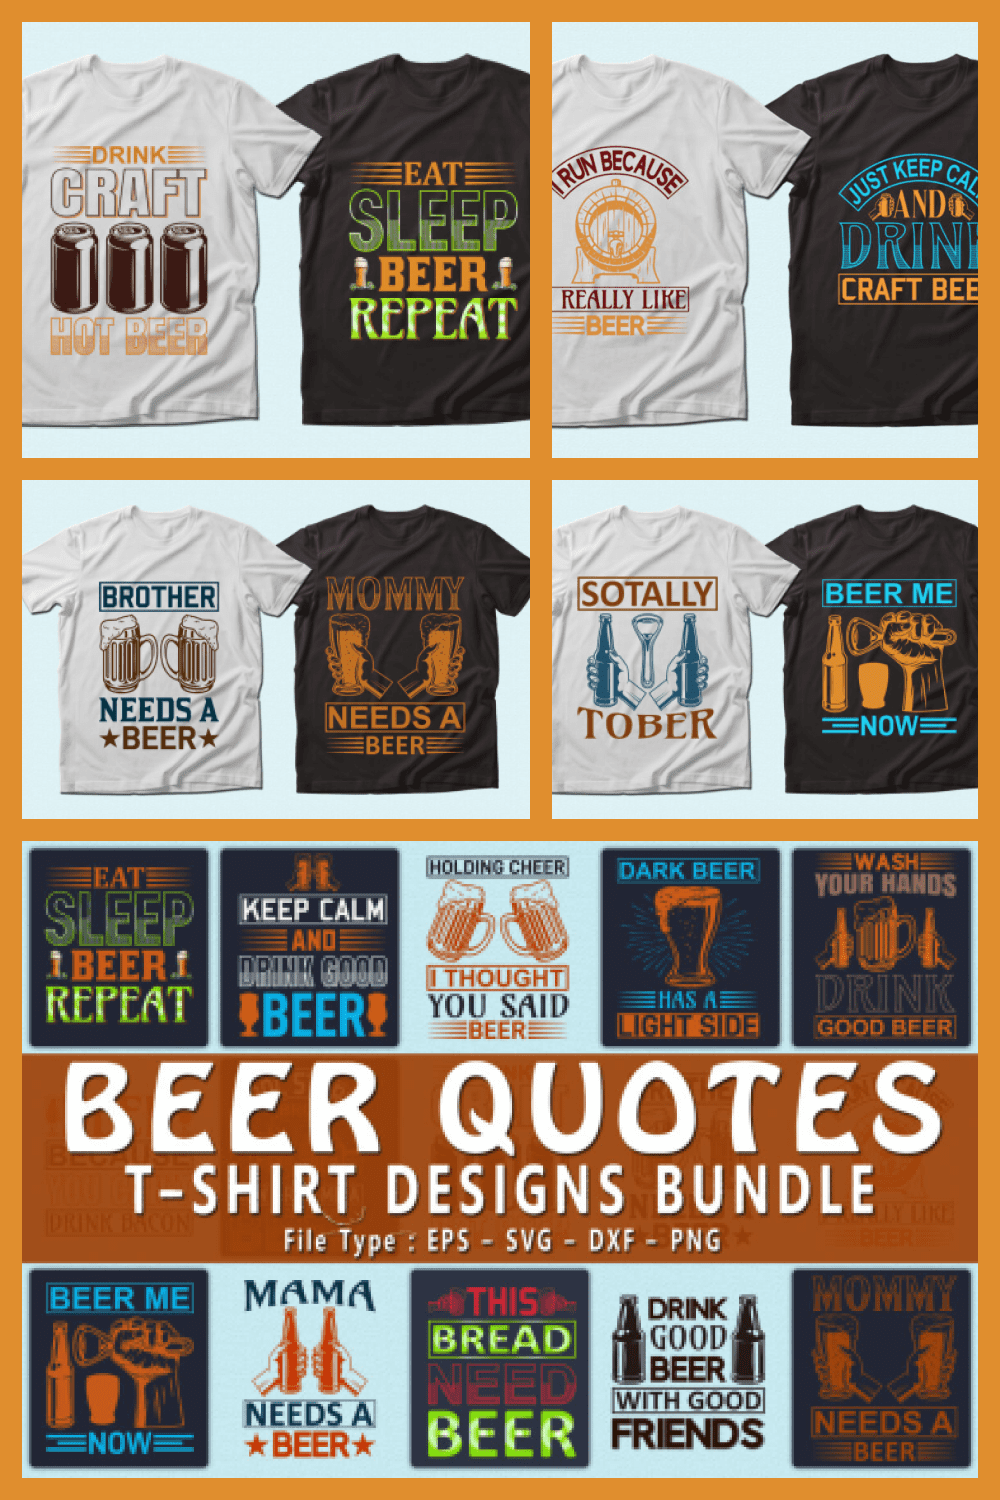 162 20 Beer Quotes T shirt Designs Bundle